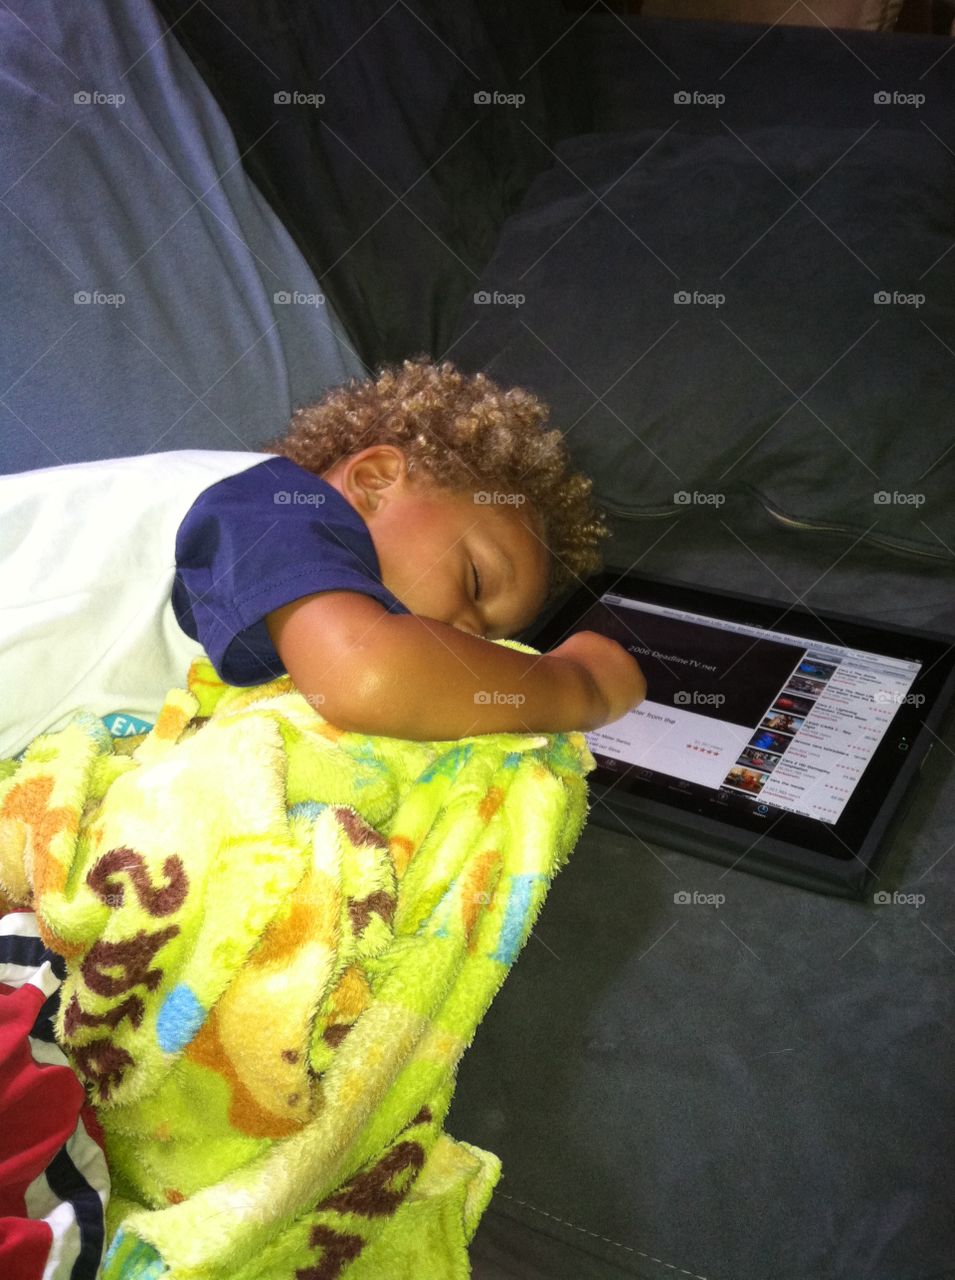 A boy and his iPad 